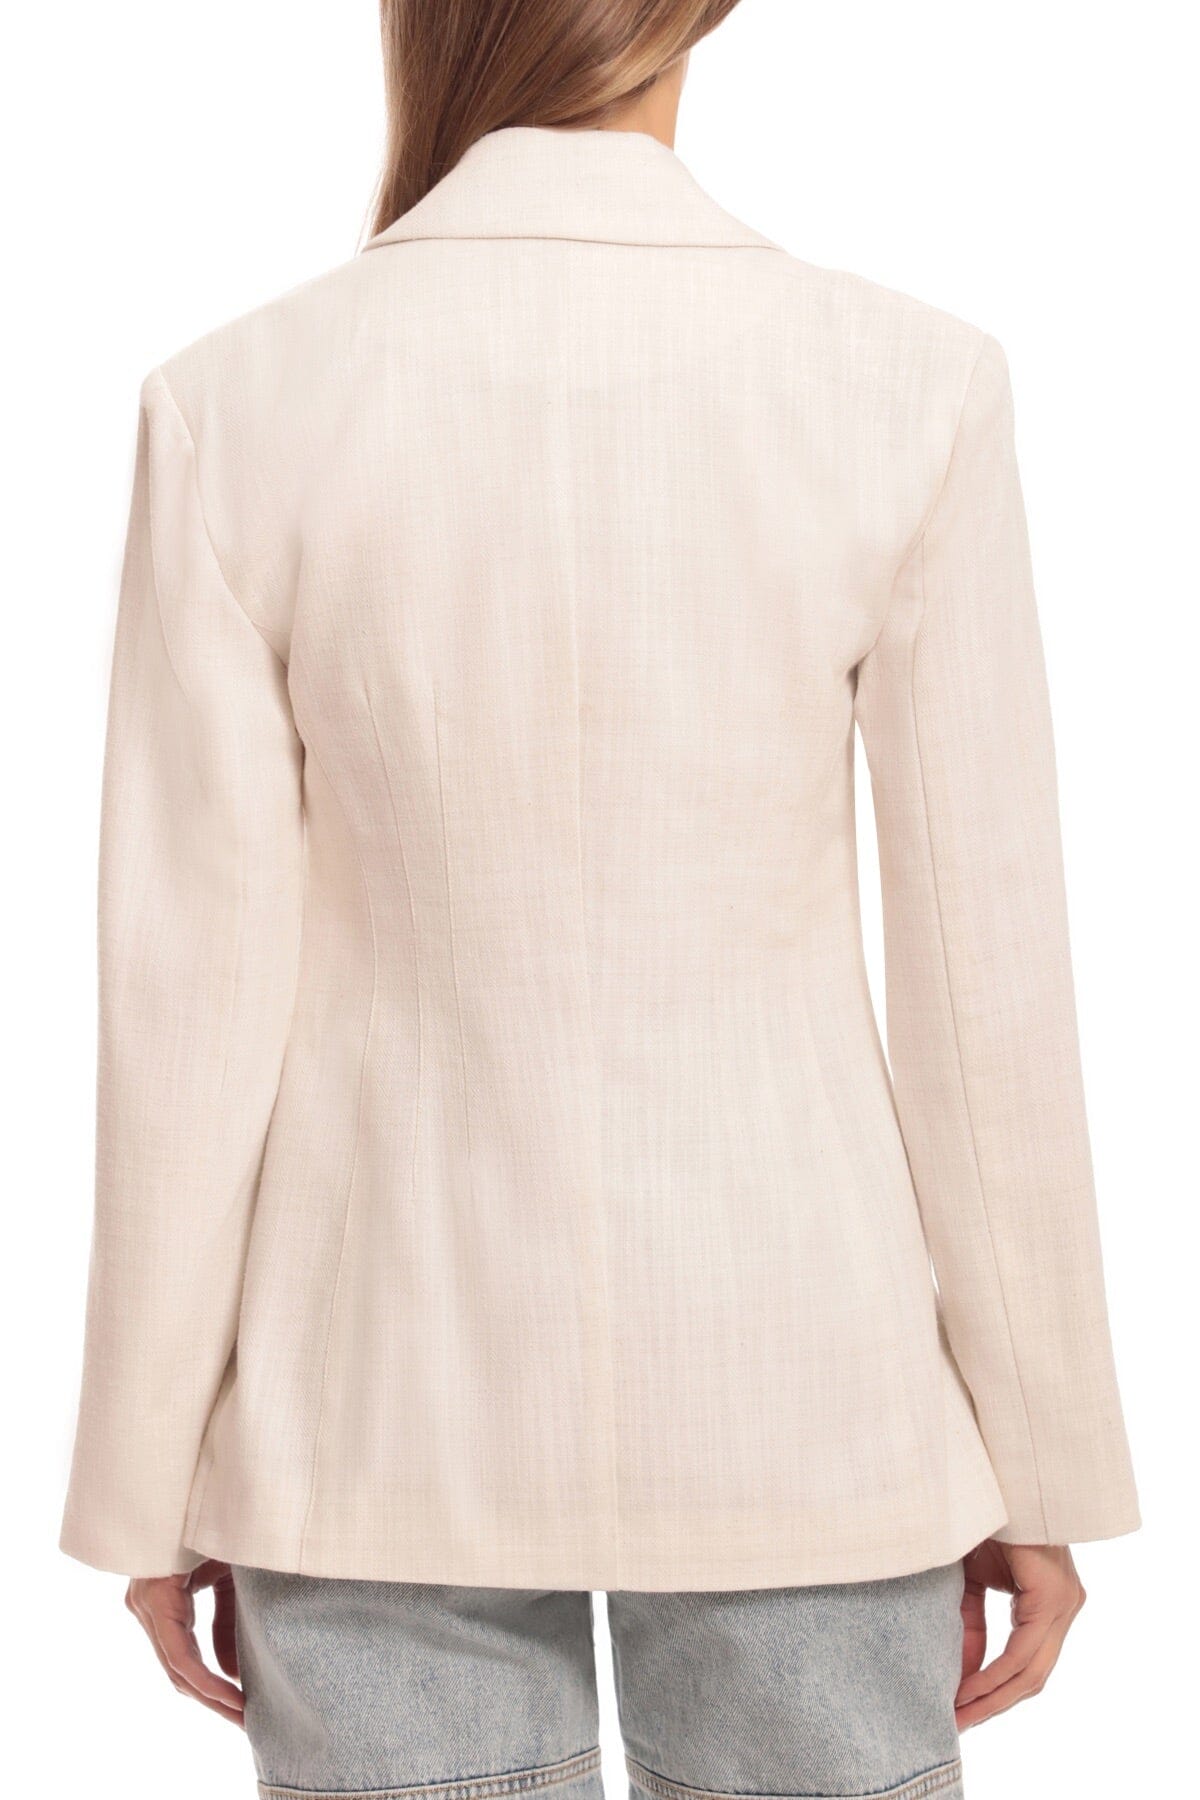 Textured Cotton Linen Sculpted Blazer women's figure flattering jackets Spring fashion